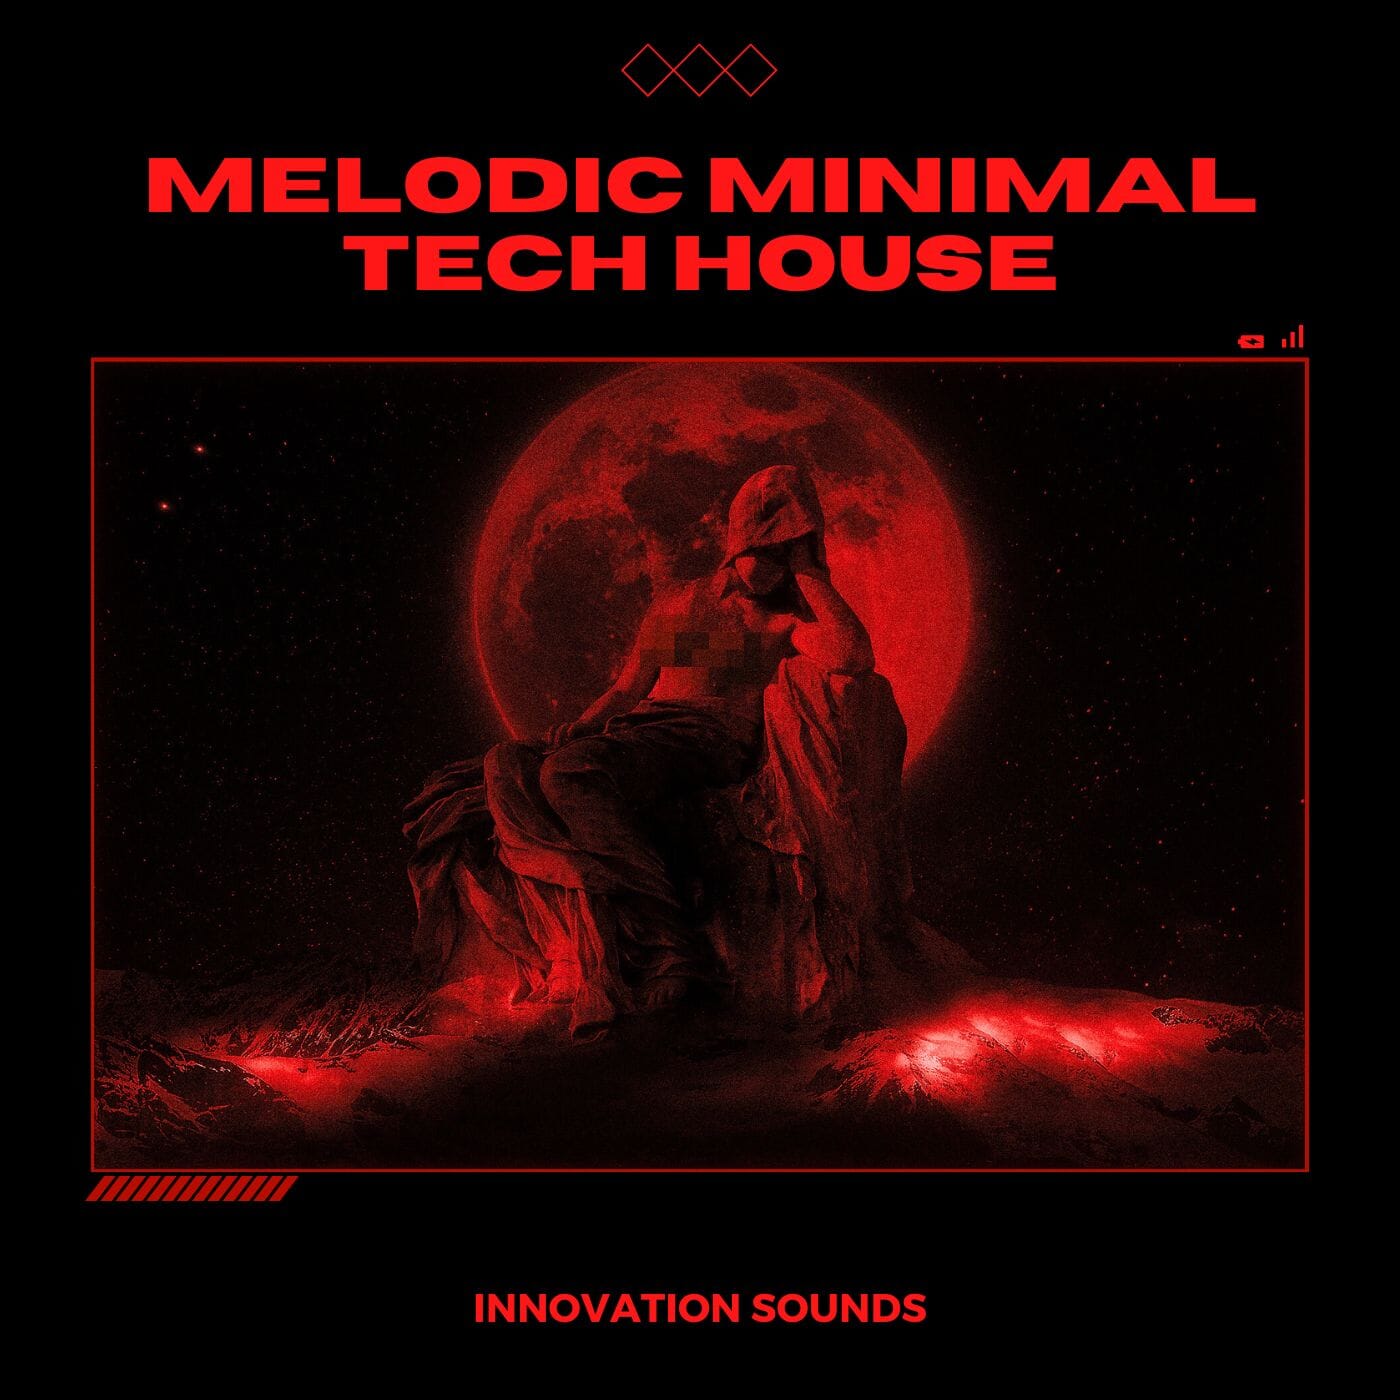 Melodic Minimal Tech House - 24 bit wav - MIDI files